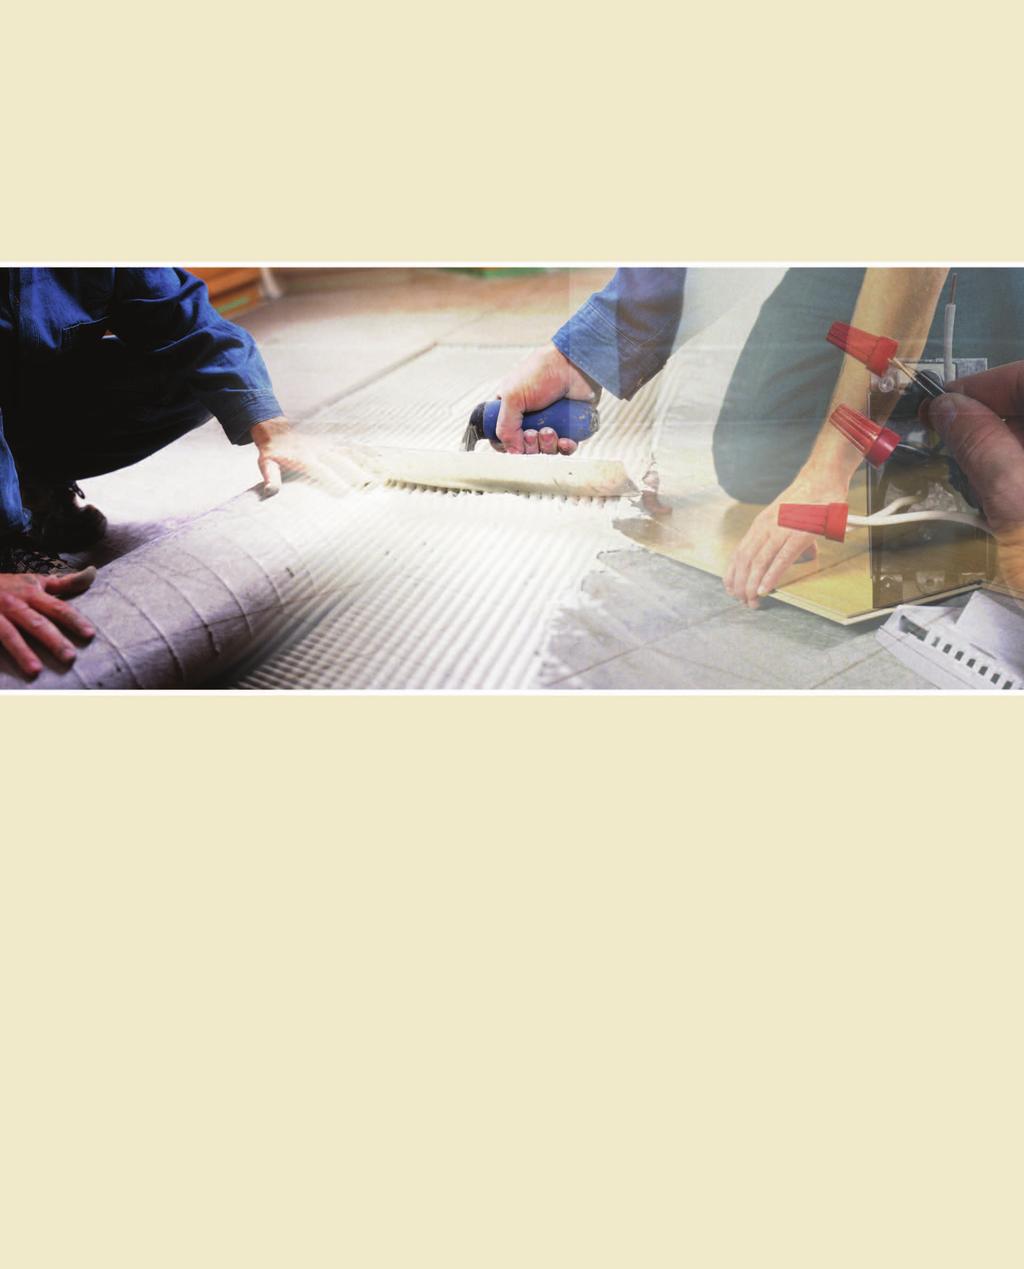 Nuheat Mat Installation Manual Nuheat Electric Floor Heating System Includes installation guidelines for installing the Nuheat Floor